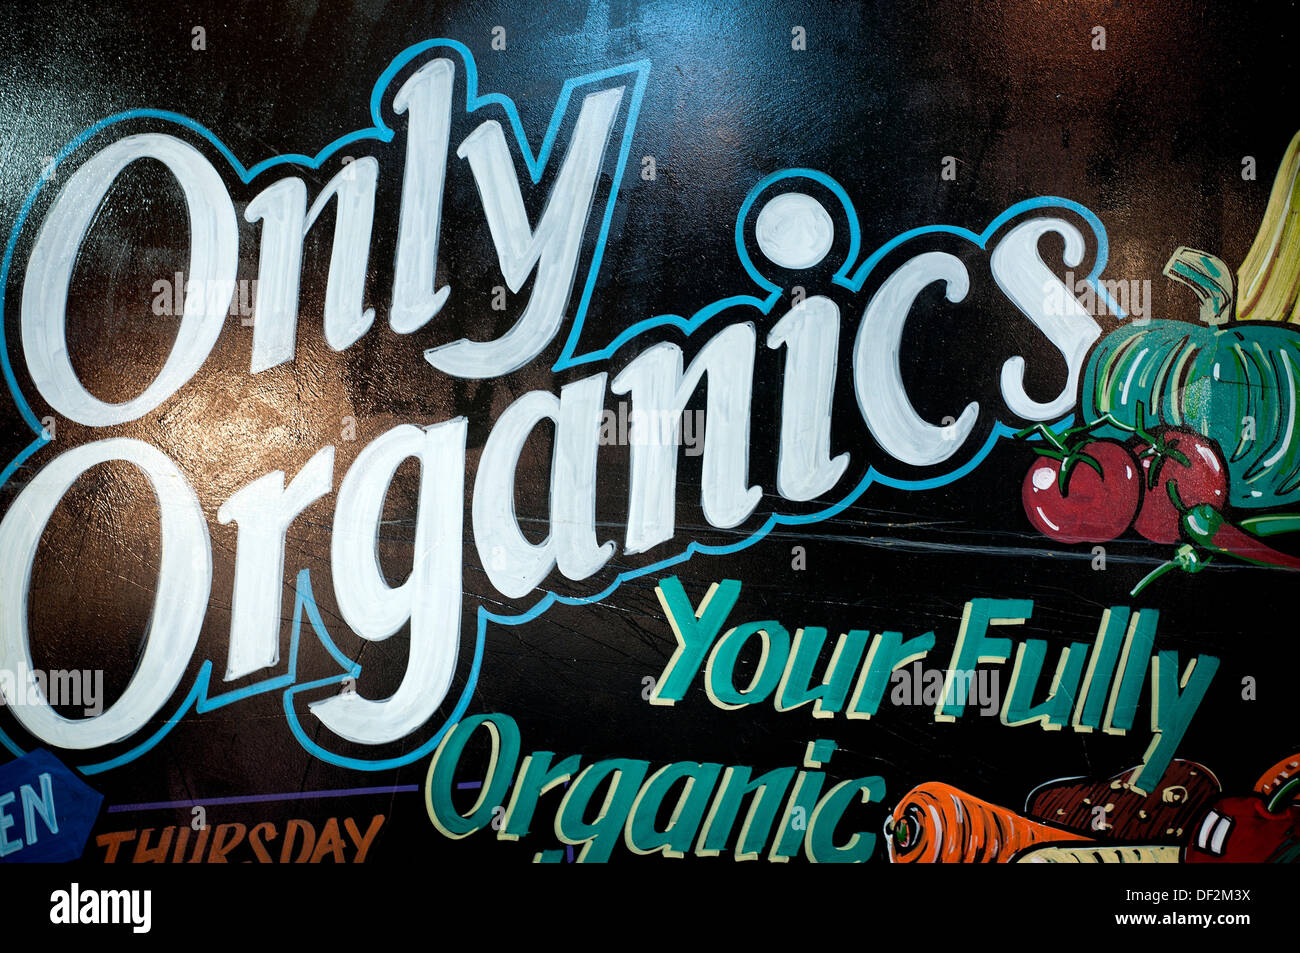 Organics sign Stock Photo